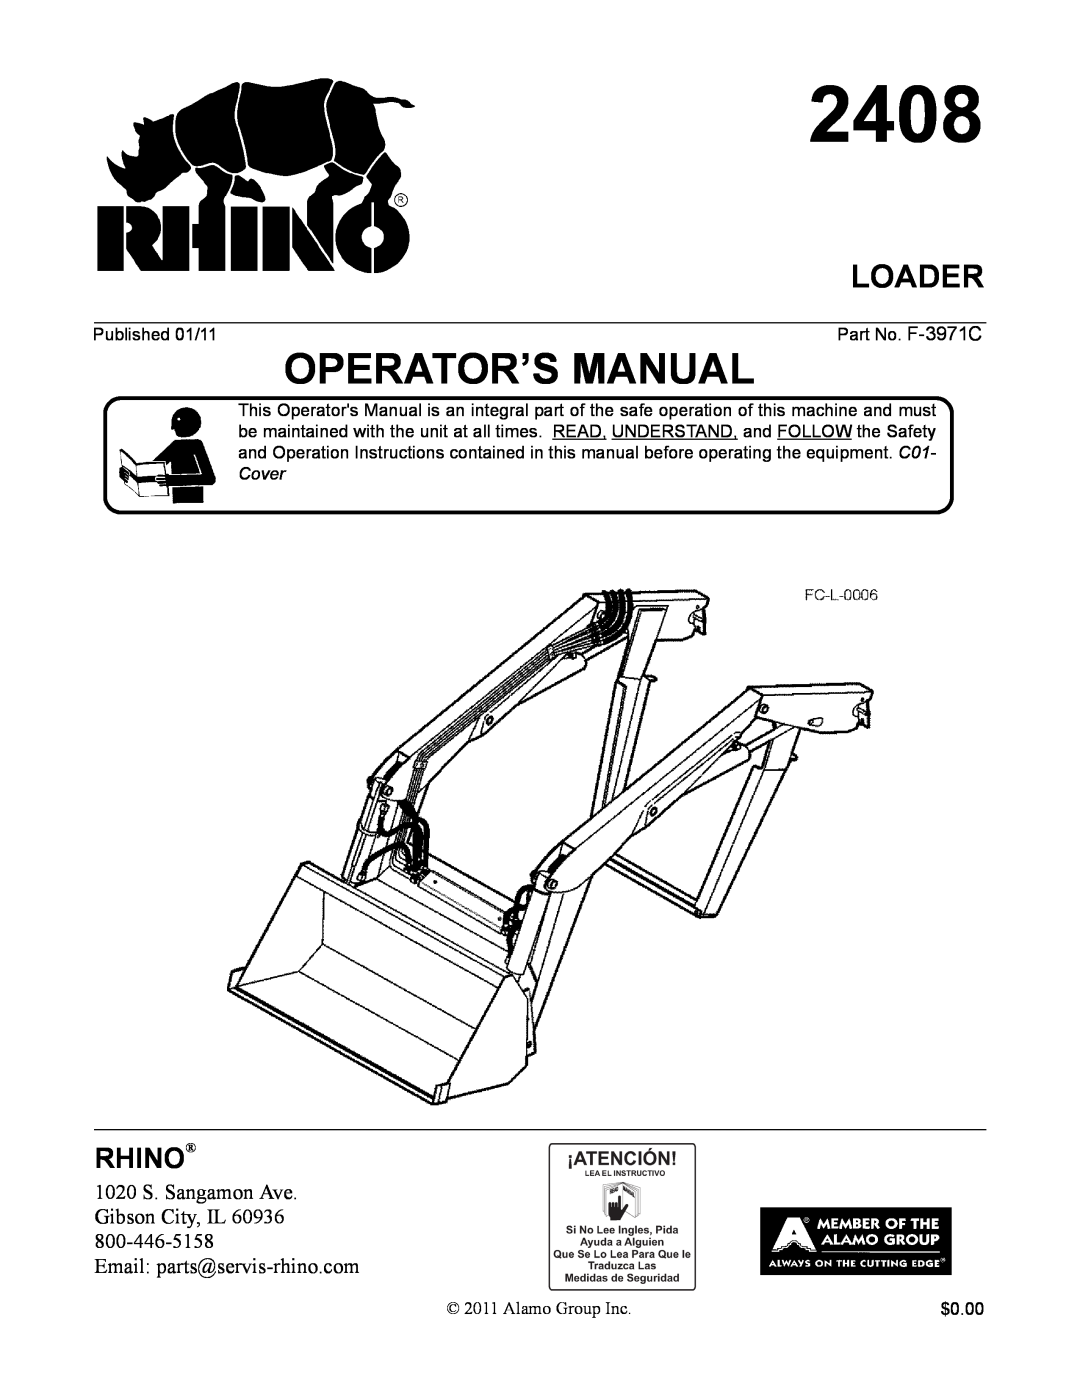 Rhino Mounts 2408 manual Loader, Operator’S Manual, Rhino, 1020 S. Sangamon Ave Gibson City, IL 60936 